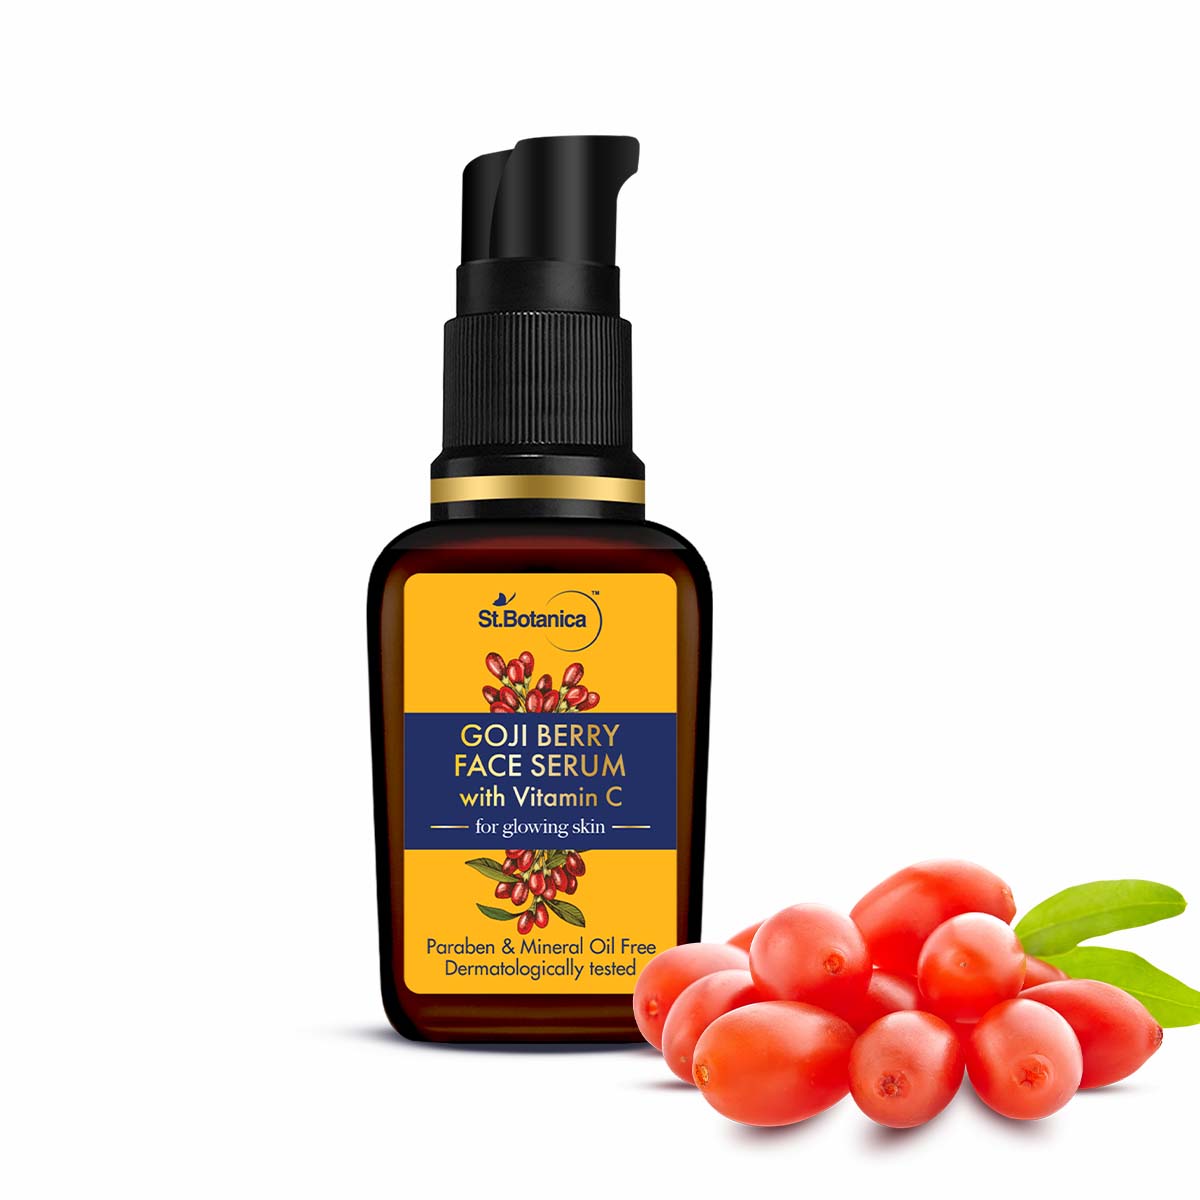 St.Botanica Goji Berry Face Serum, 30ml with Antioxidant-Rich Goji Berry, 6% Vitamin C & Dragonfruit | For Clear, Bright, & Youthful Skin | Paraben Free, Cruelty Free & Vegan